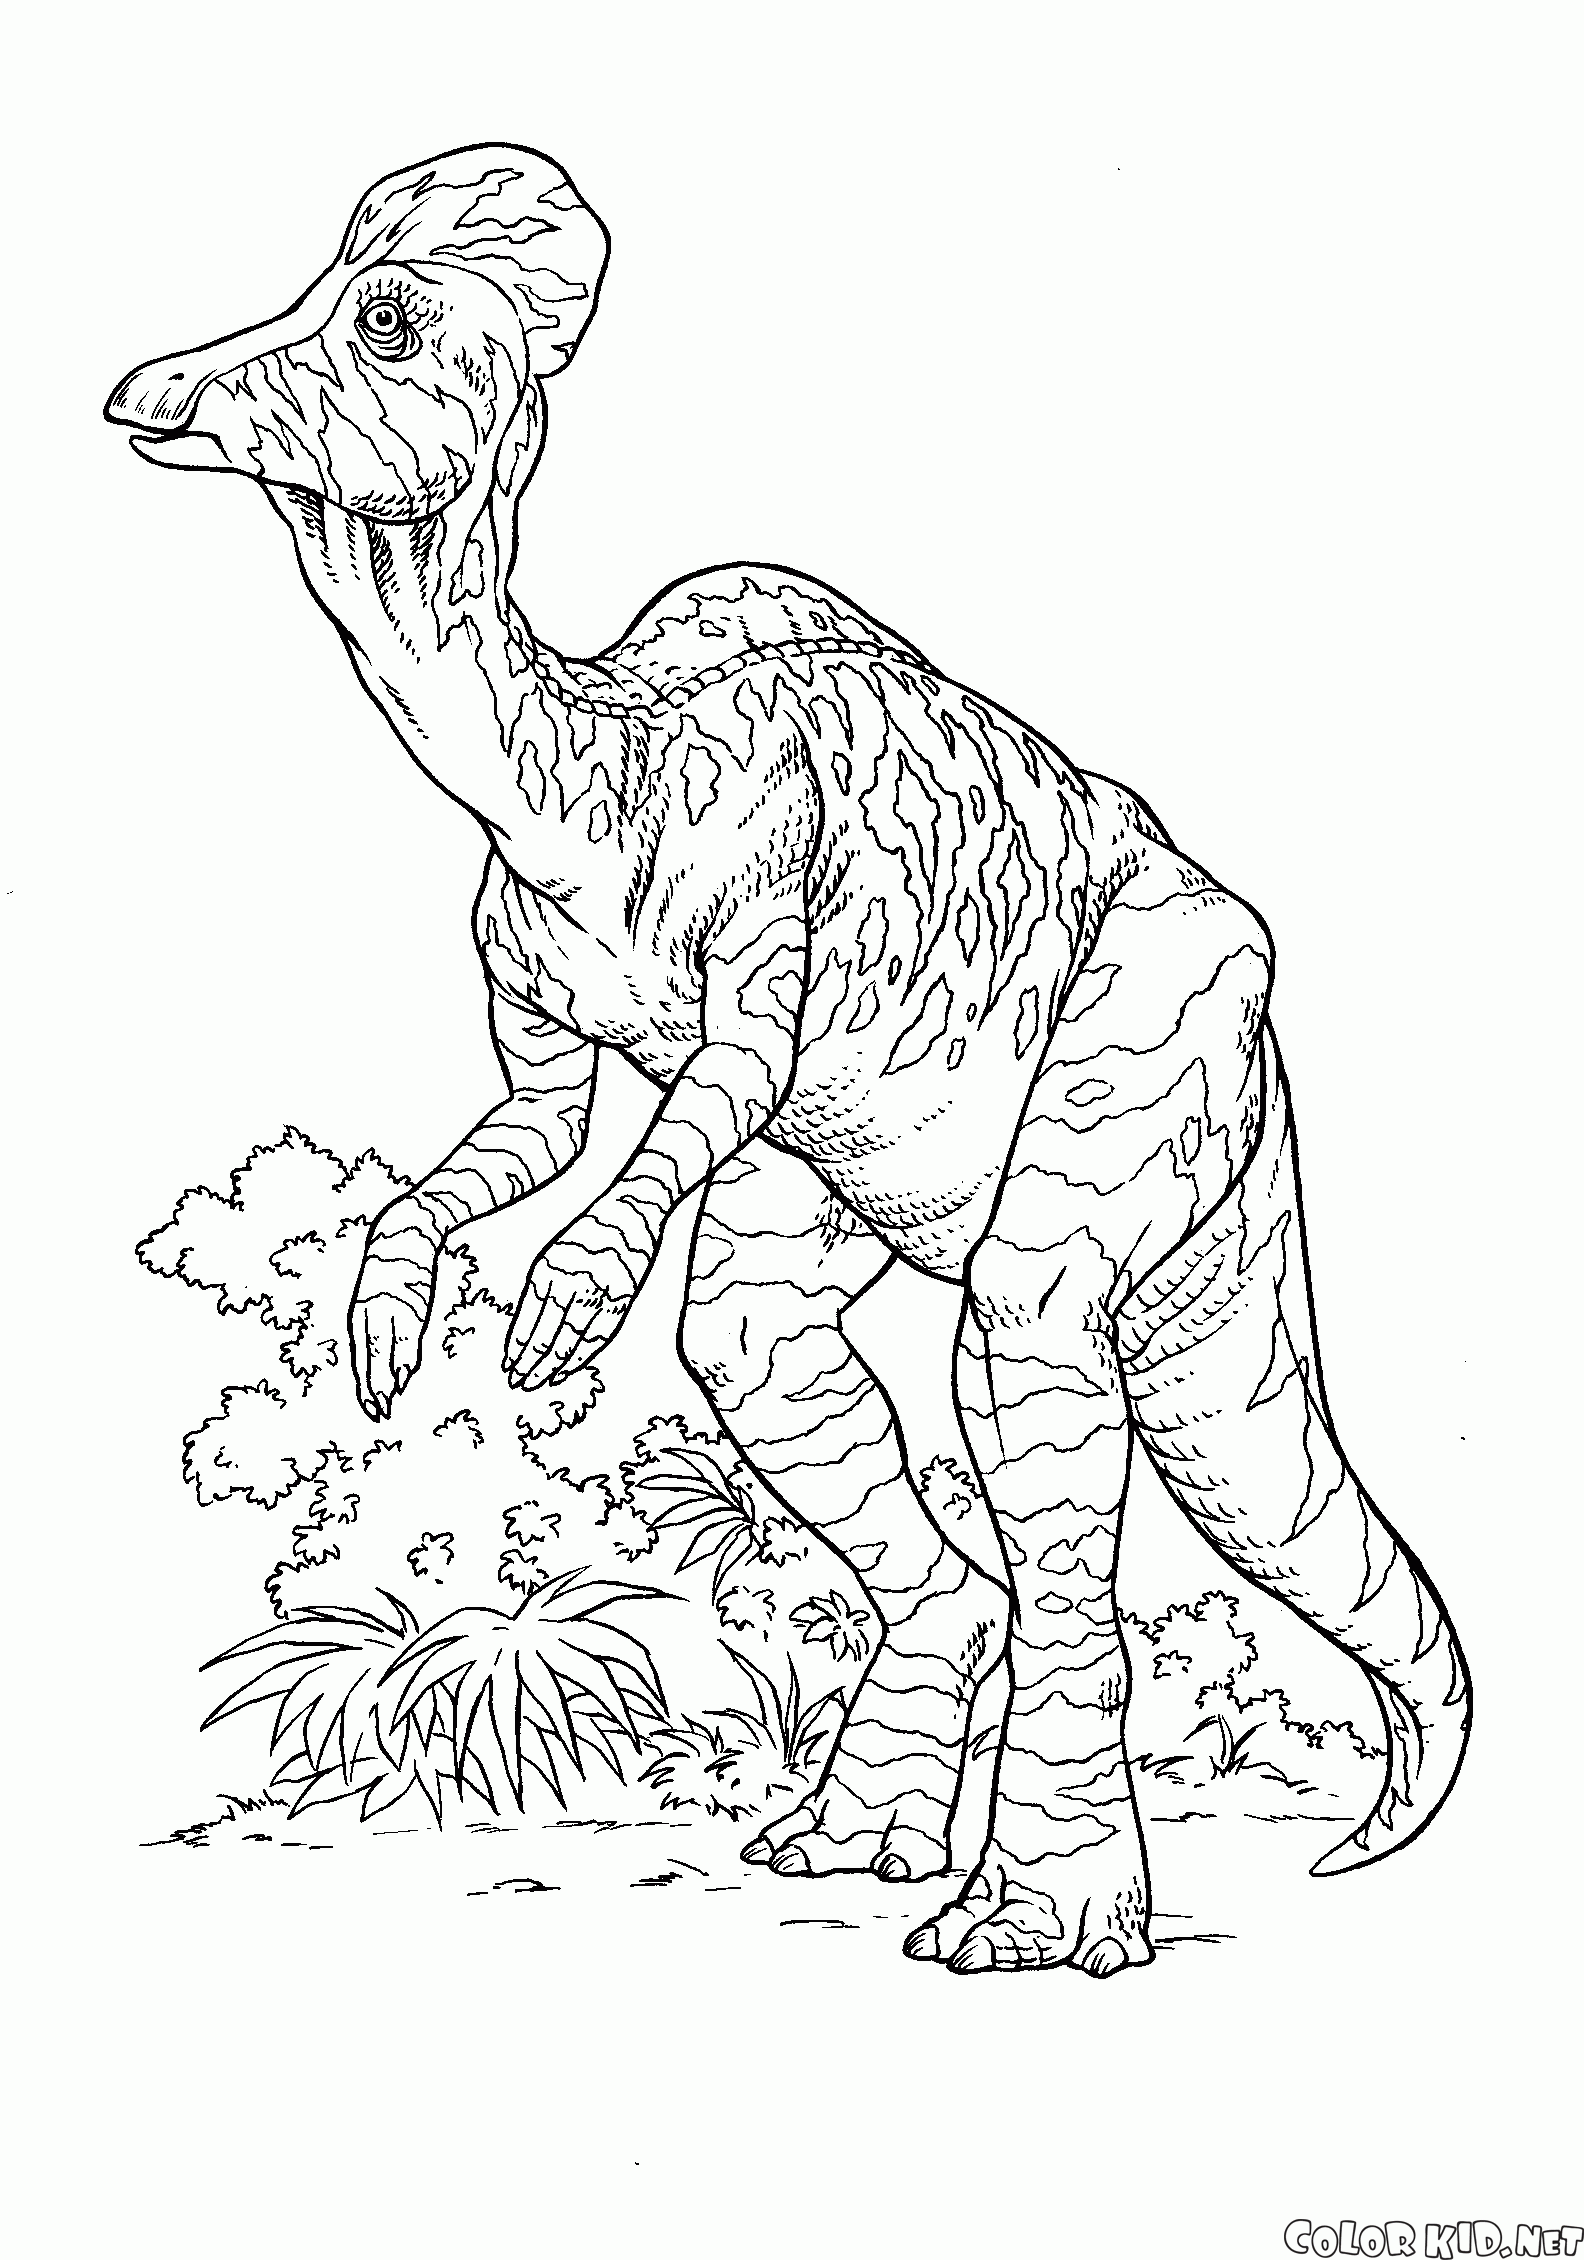 Coloring page - Brachiosaurus